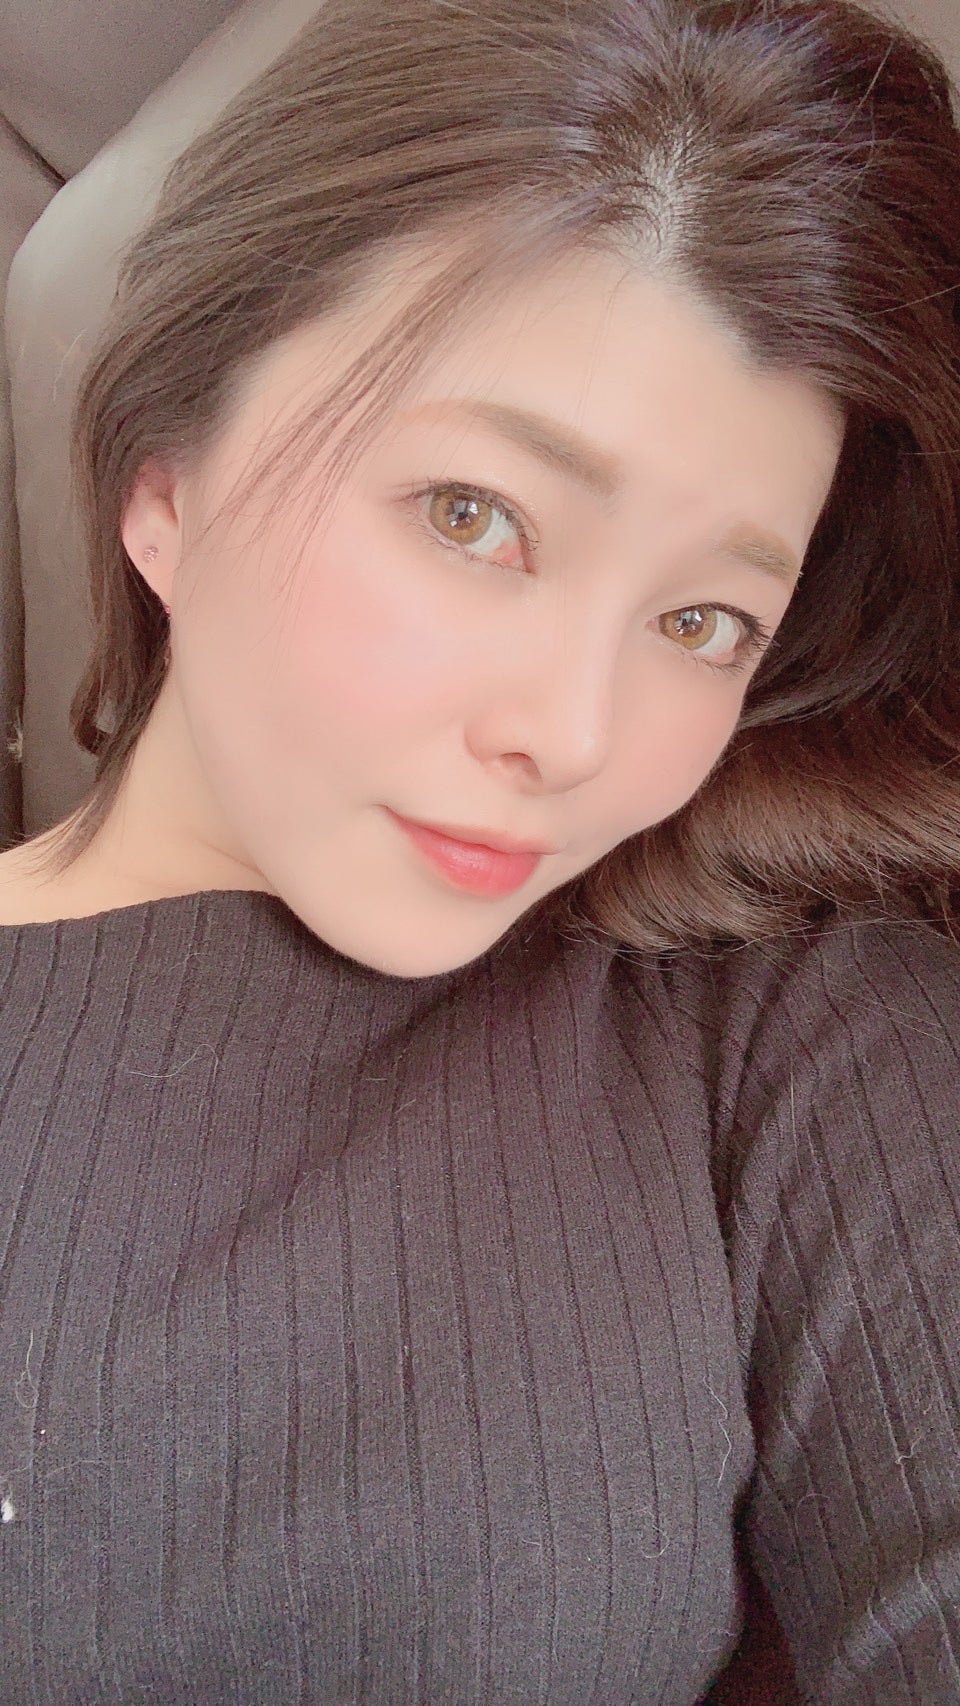 岡江凛 She is Rin Okae. #岡江凛 #RinOkae #OkaeRin 【Twitter】https ...